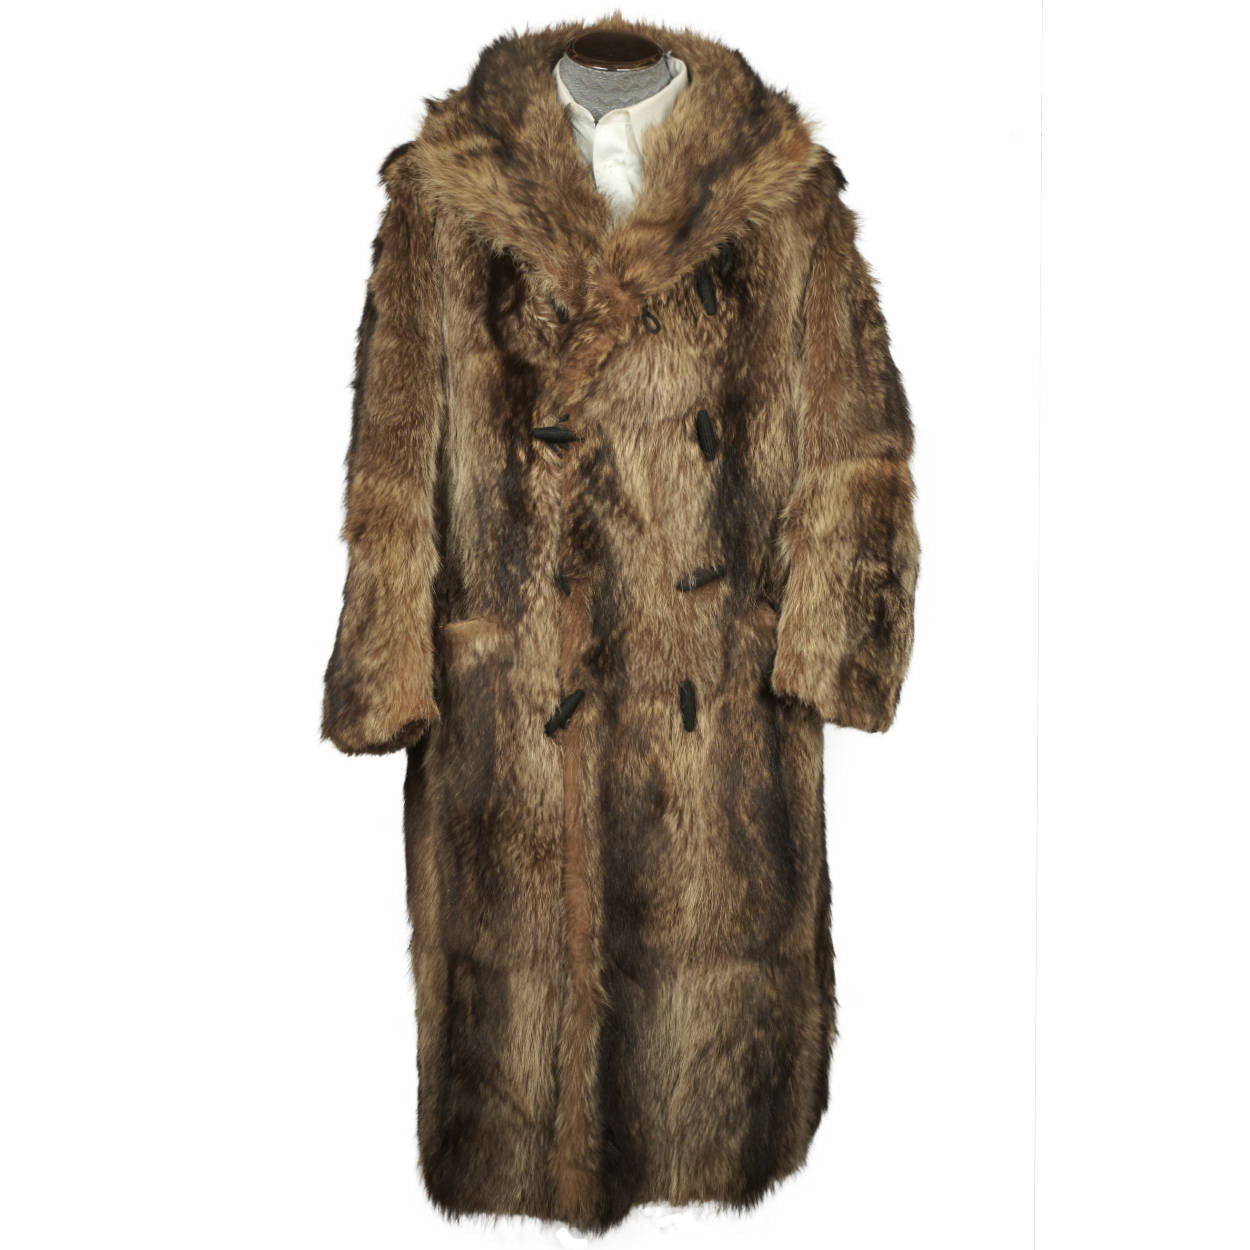 Vintage 1920s Mens Raccoon Fur Coat Ivy League Football Fan Size L